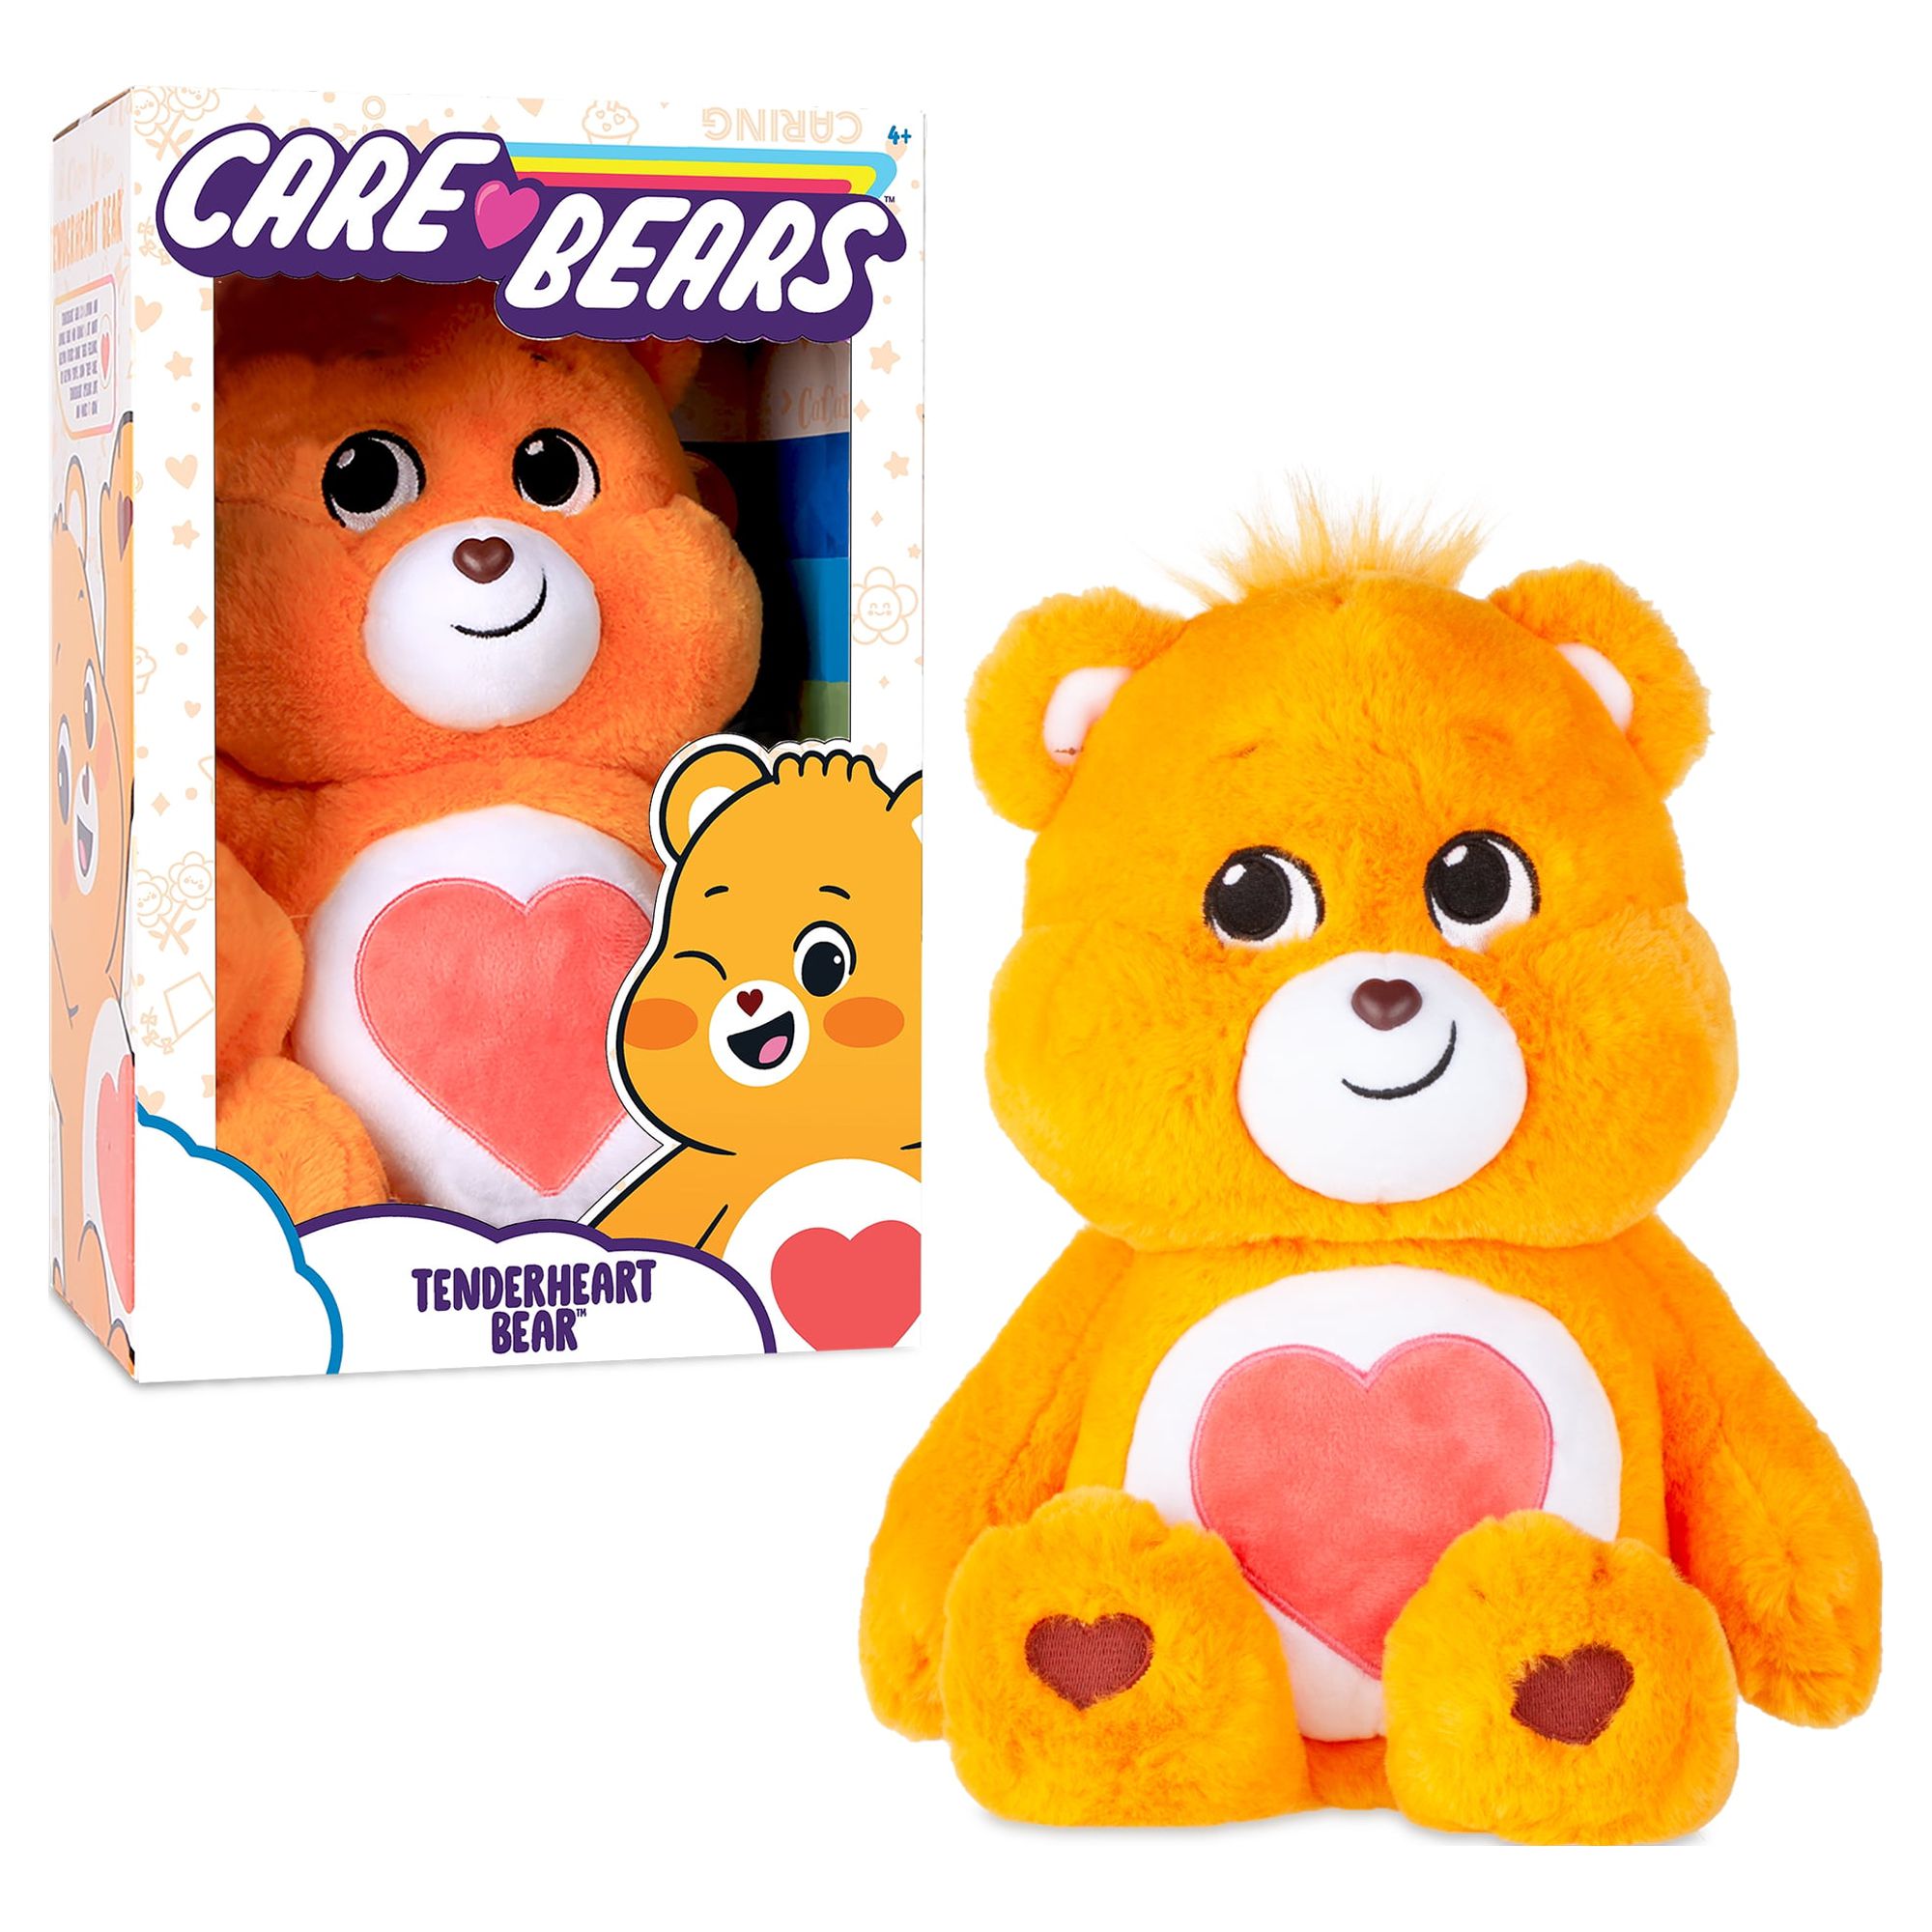 Care Bears 14" Plush - Tenderheart Bear - Soft Huggable Material! - image 1 of 9